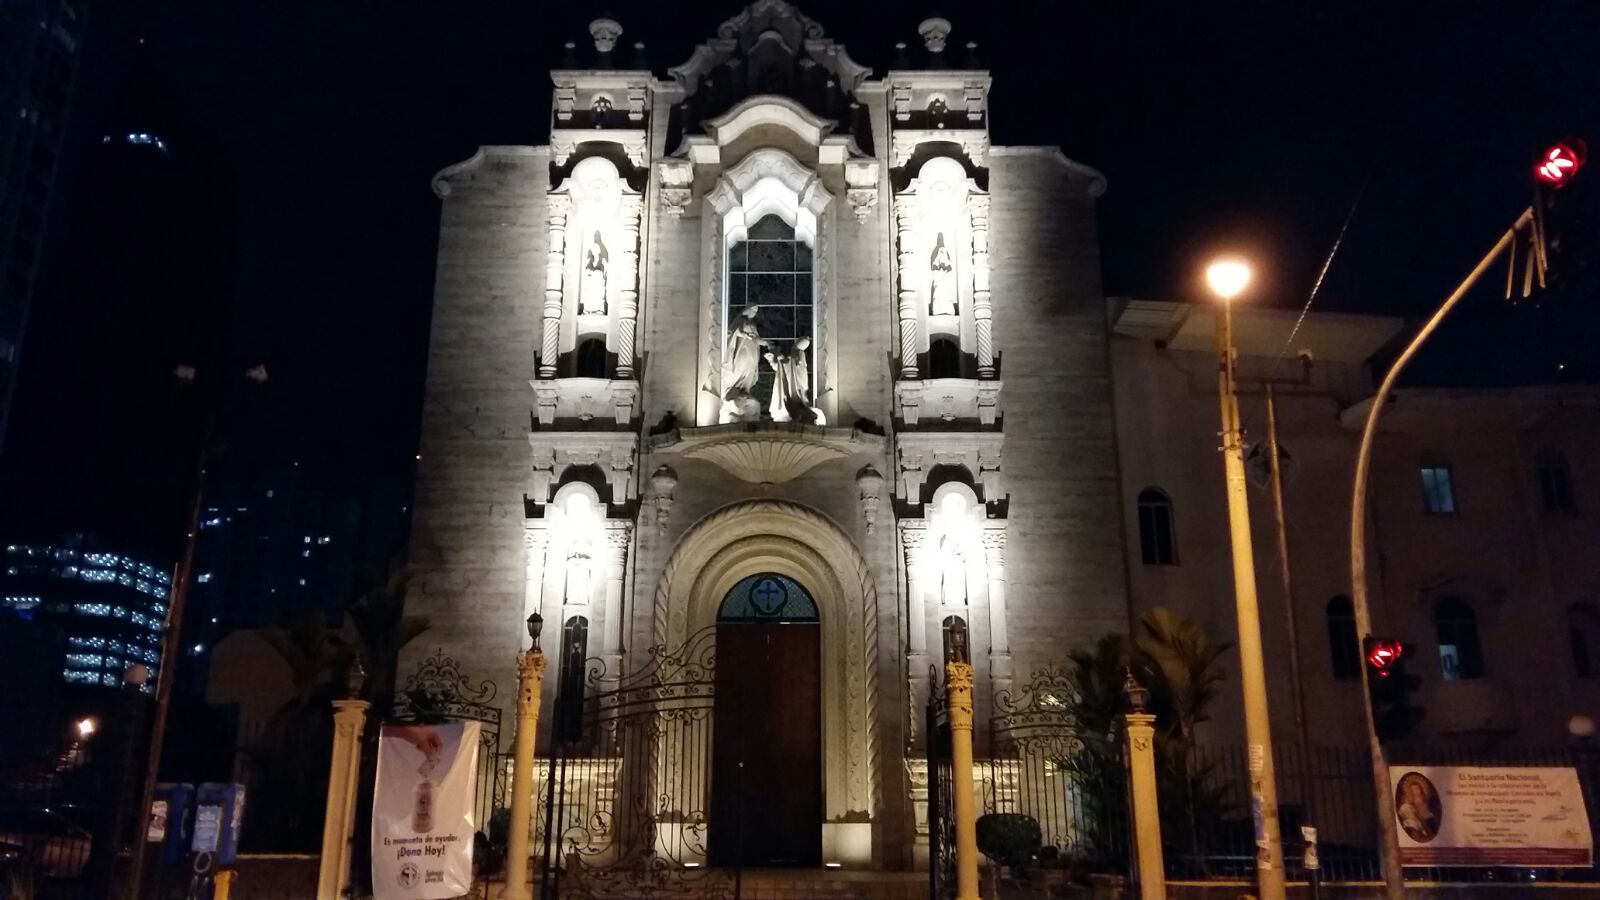 https://www.audiofotopro.com/wp-content/uploads/2019/05/Iluminación-del-Santuario-Nacional-2-2.jpg